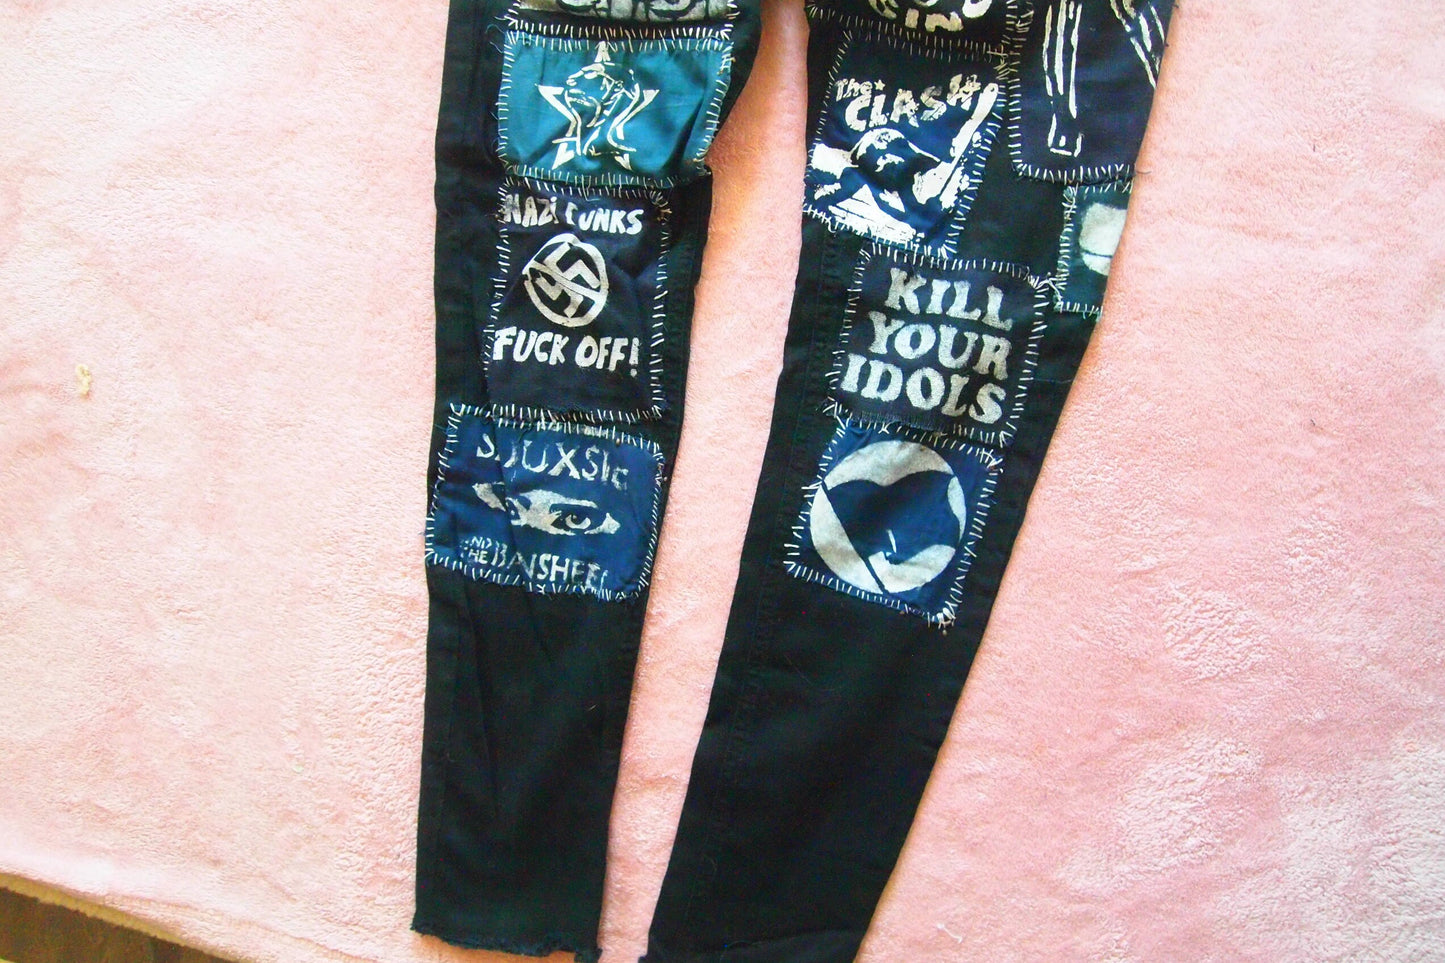 Custom Punk Patched Black Jeans Sz 2 Ruff Hewn Grey the Misfits Bauhaus Goth New Wave Handmade